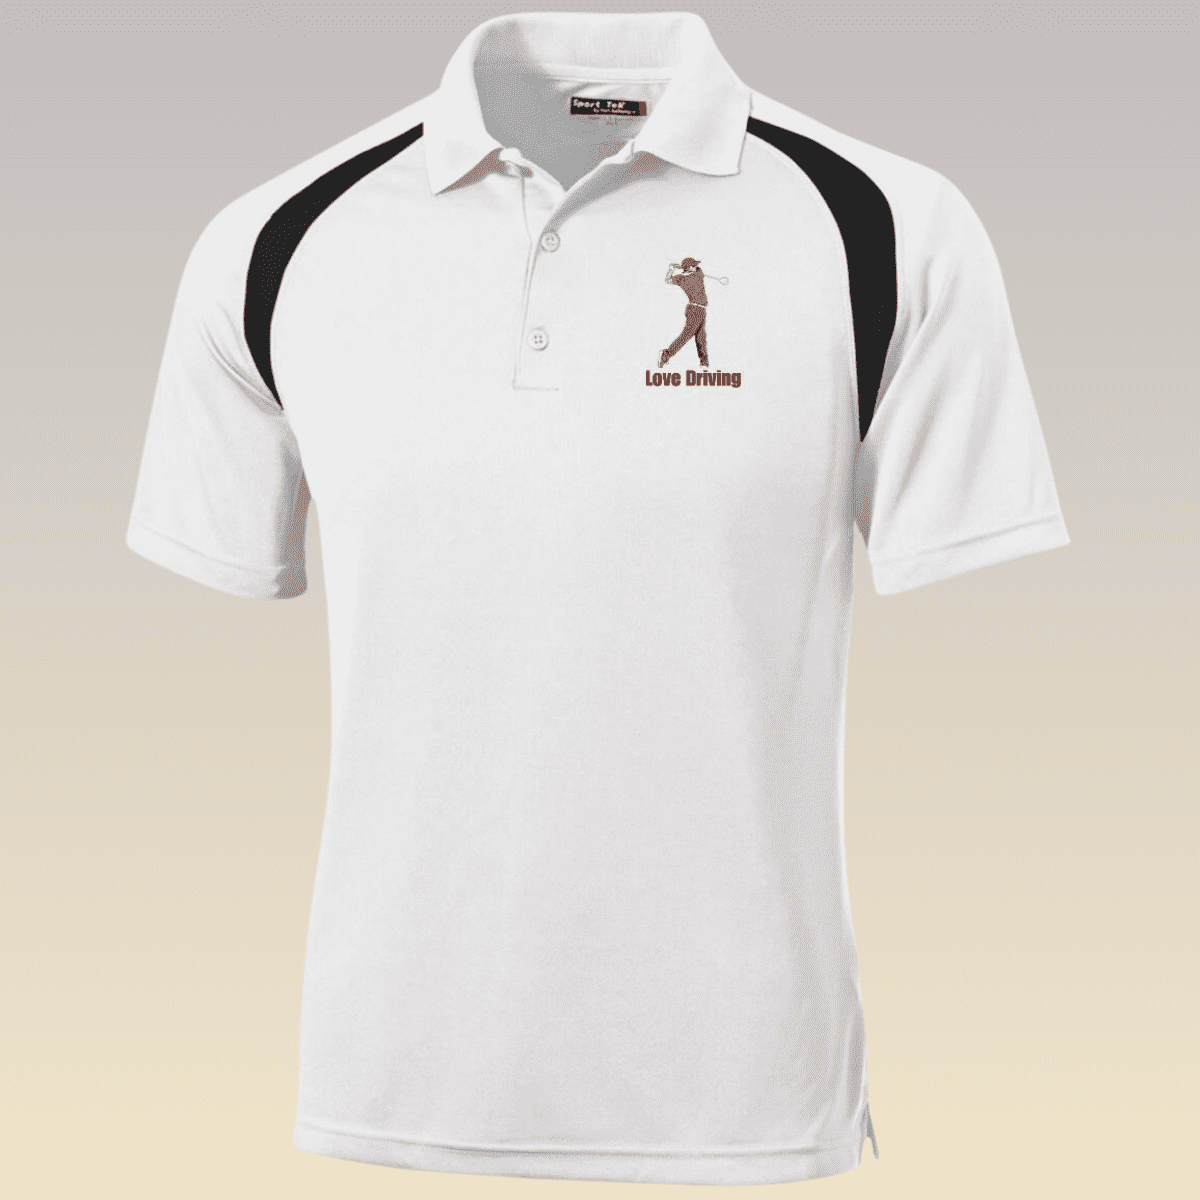 Men's White and Black Golf Love Driving Moisture-Wicking Polo Shirt